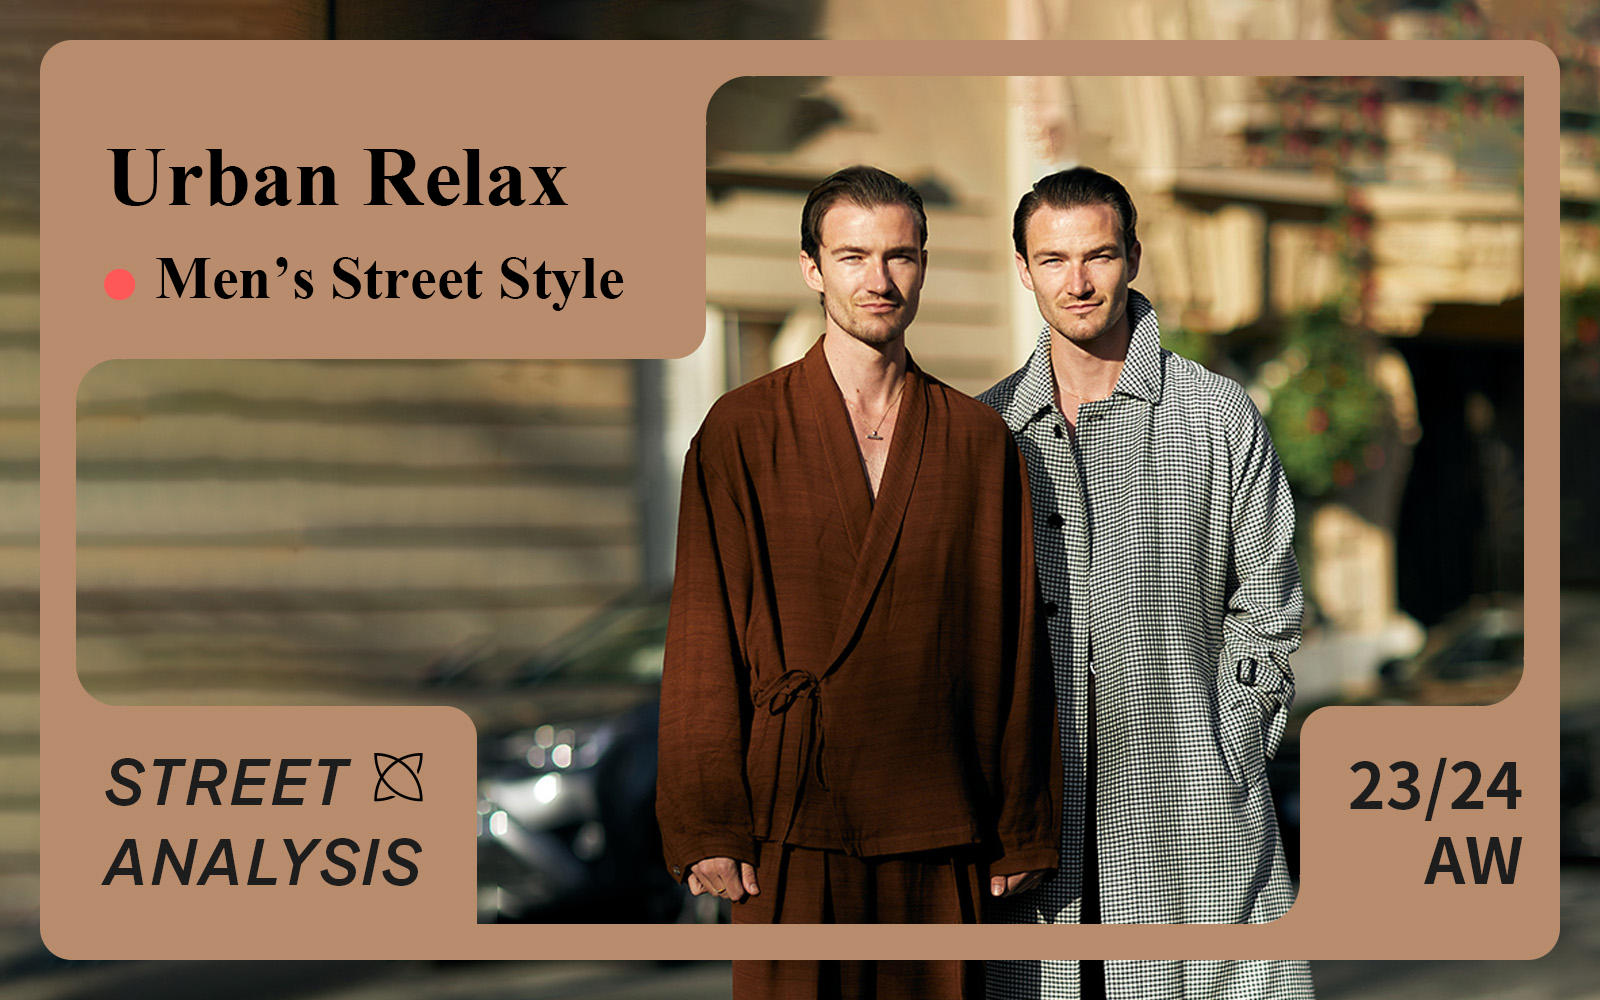 Urban Relax -- The Analysis of Men's Street Style